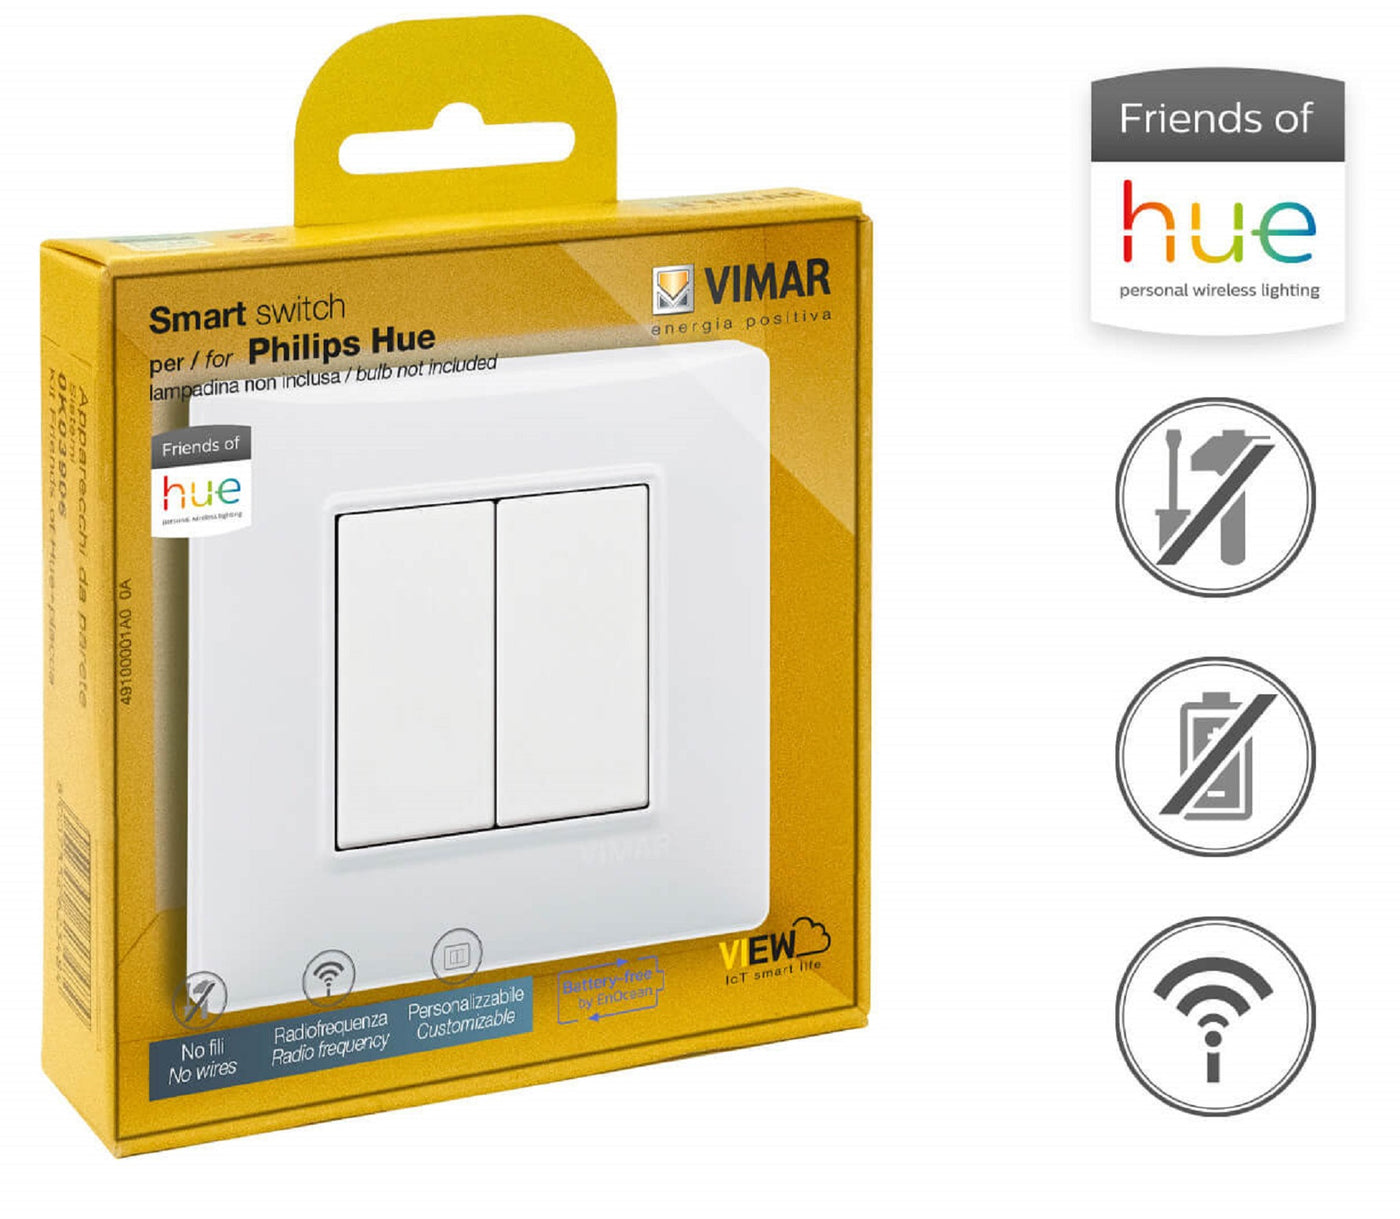 Vimar Hue Wireless Kinetic Switch - White